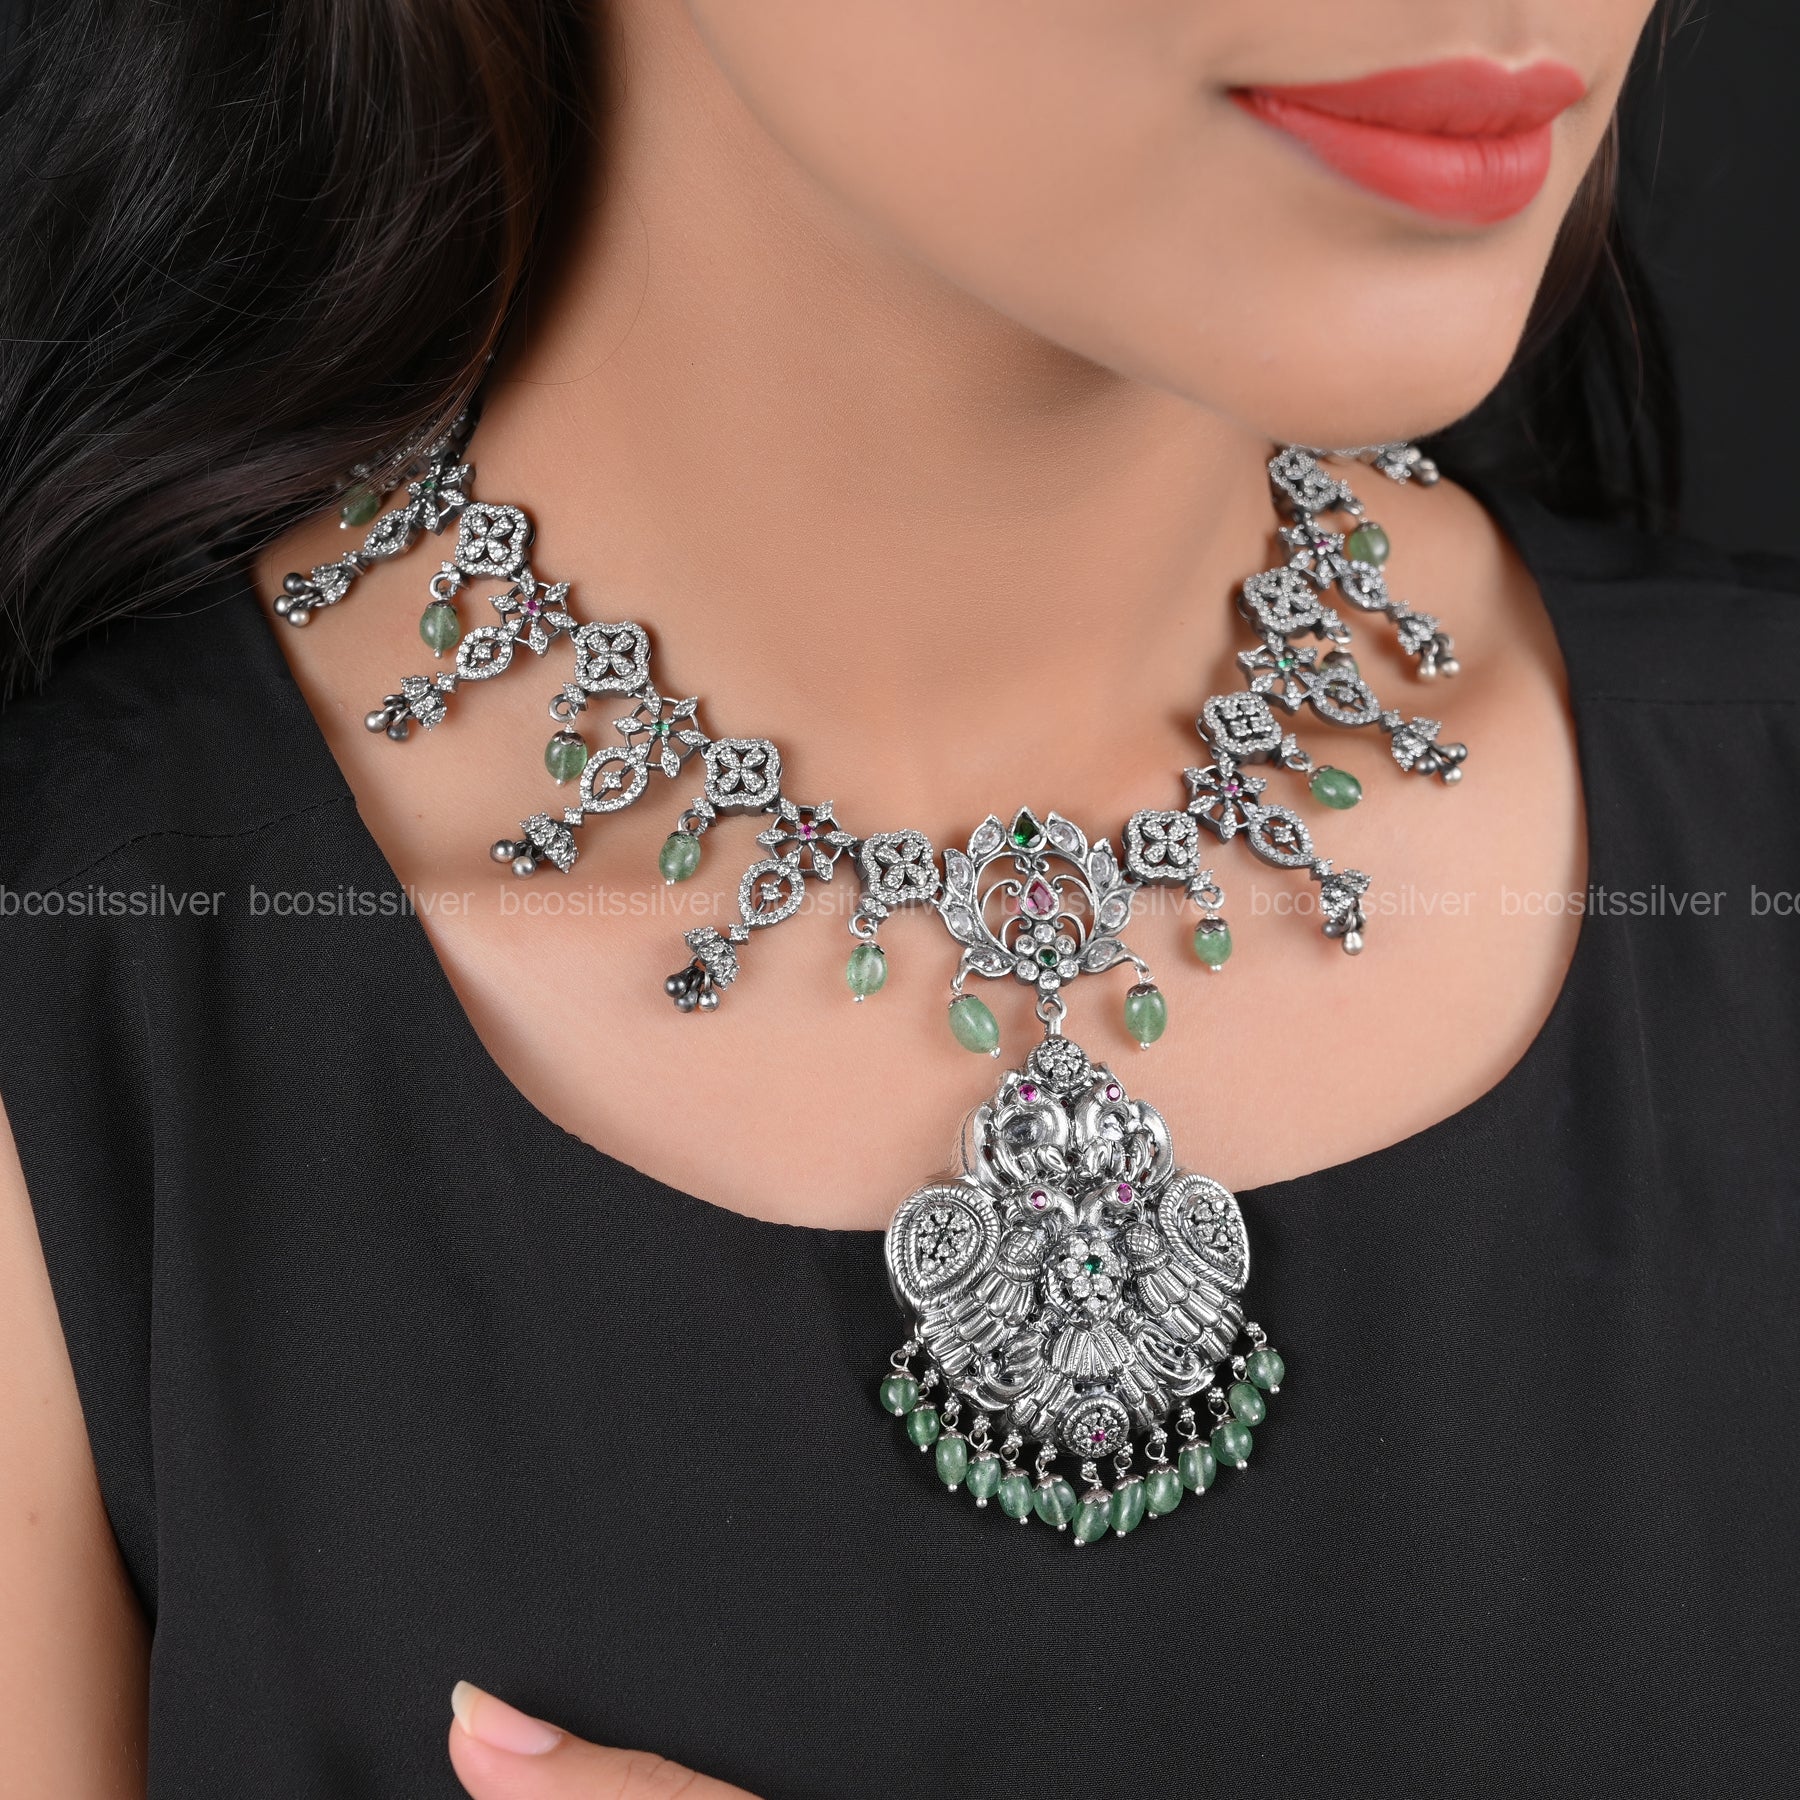 Oxidized Silver Necklace - 5080